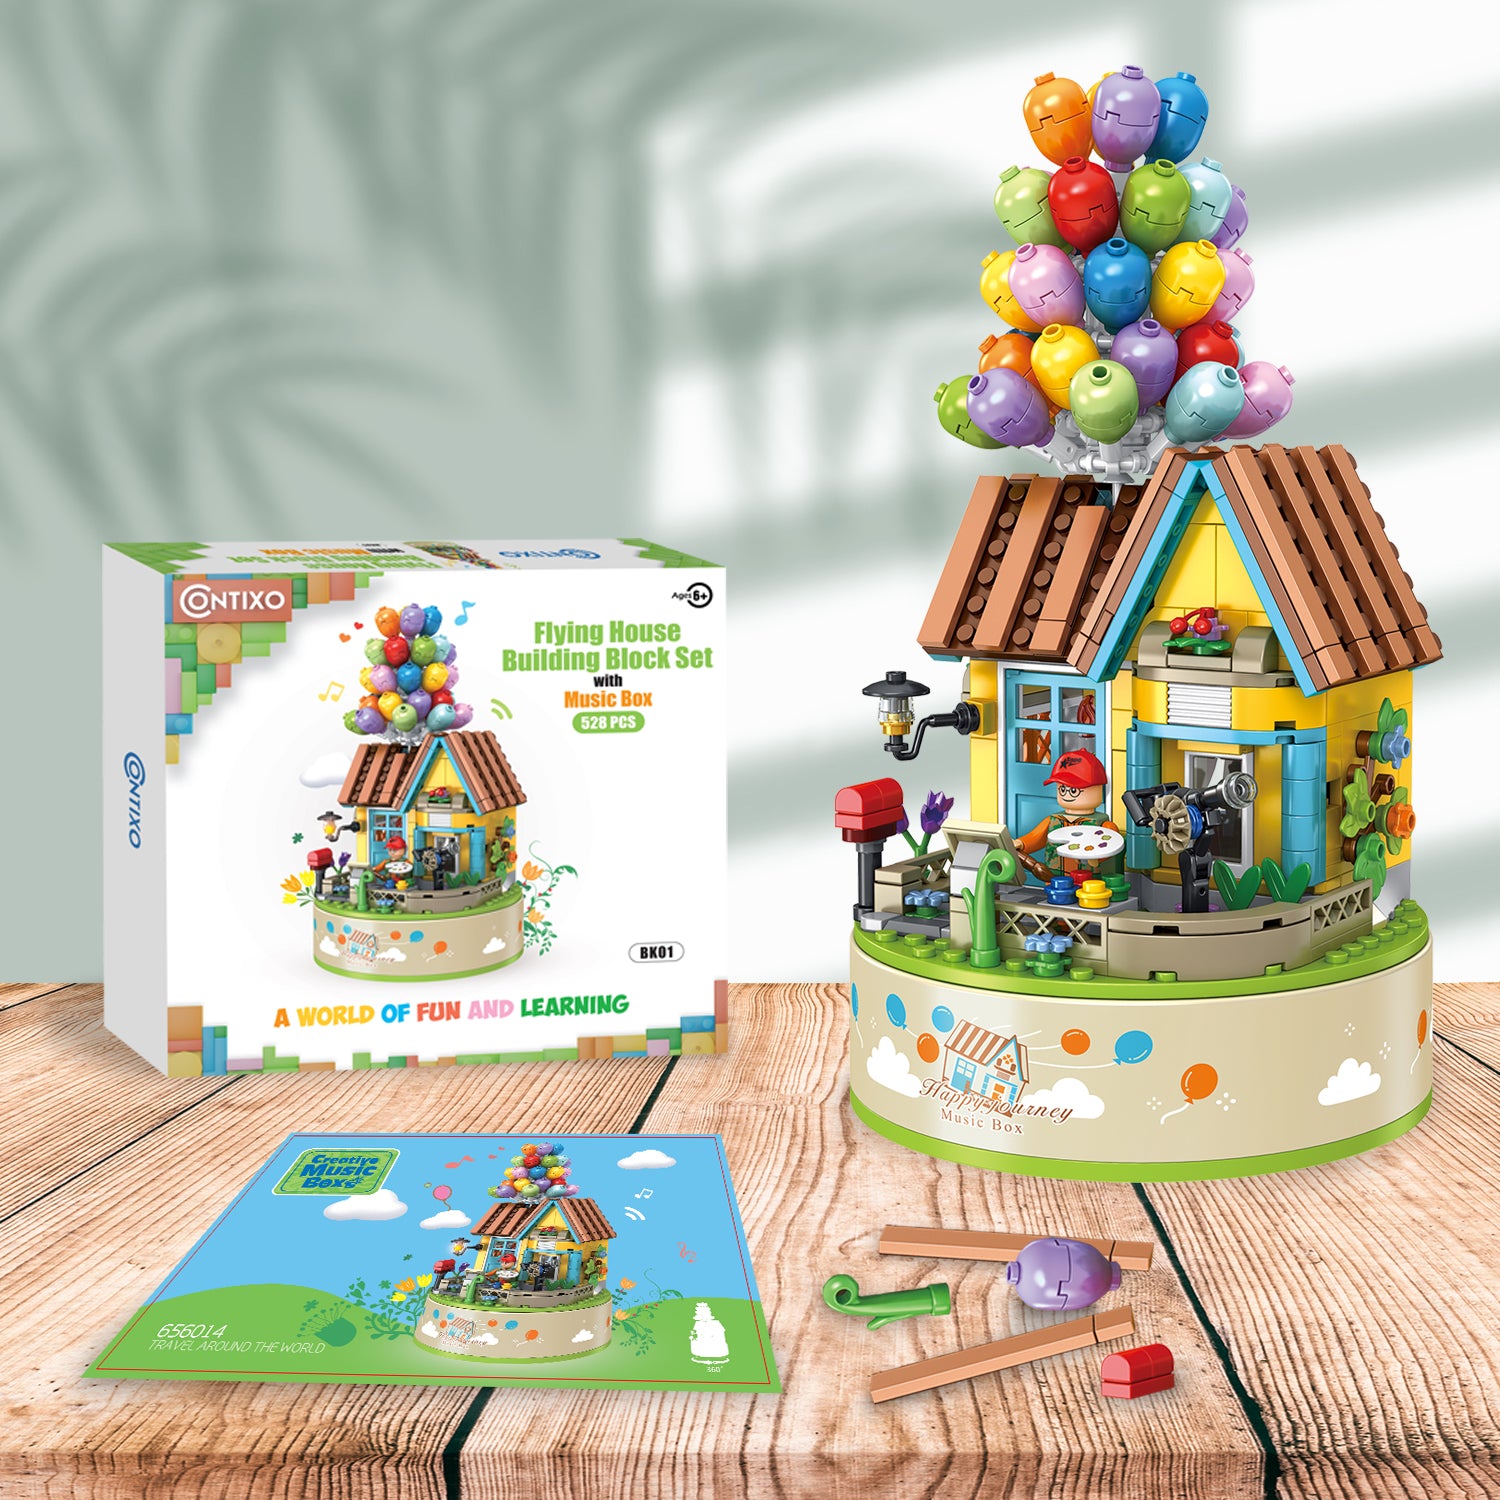 Contixo BK01 Flying Balloons Building Block Set with Music Box - 528 PCS